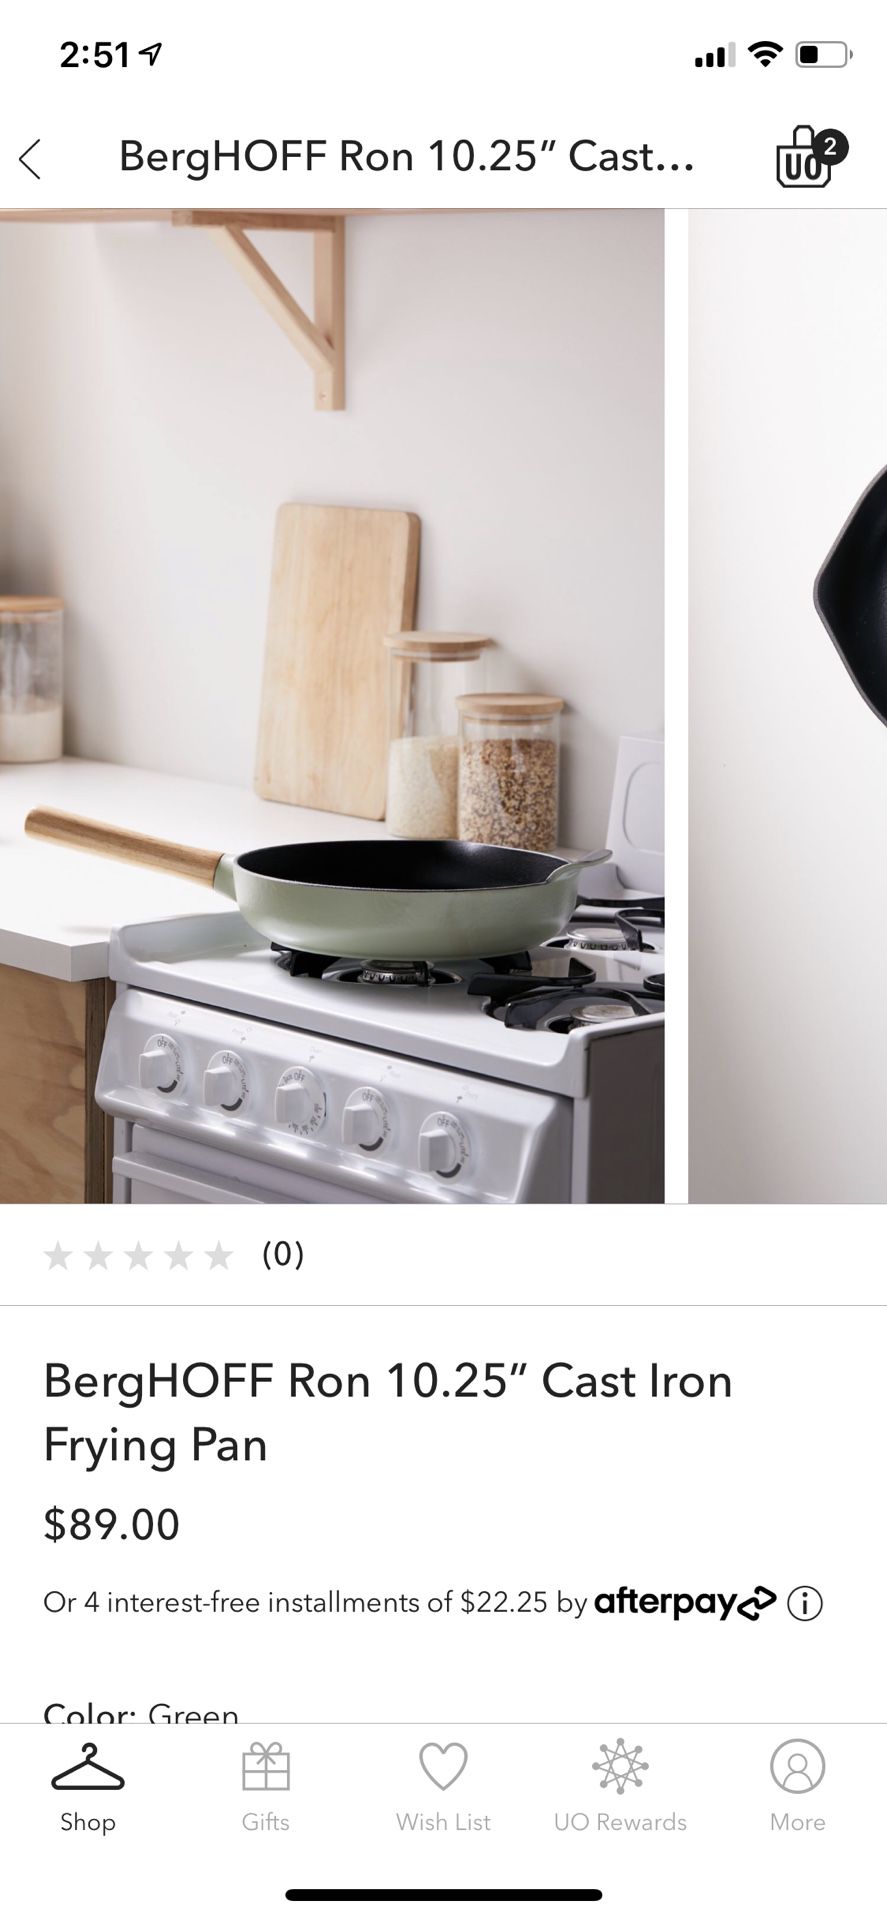 BergHOFF Ron Cast Iron Frying Pan (green)